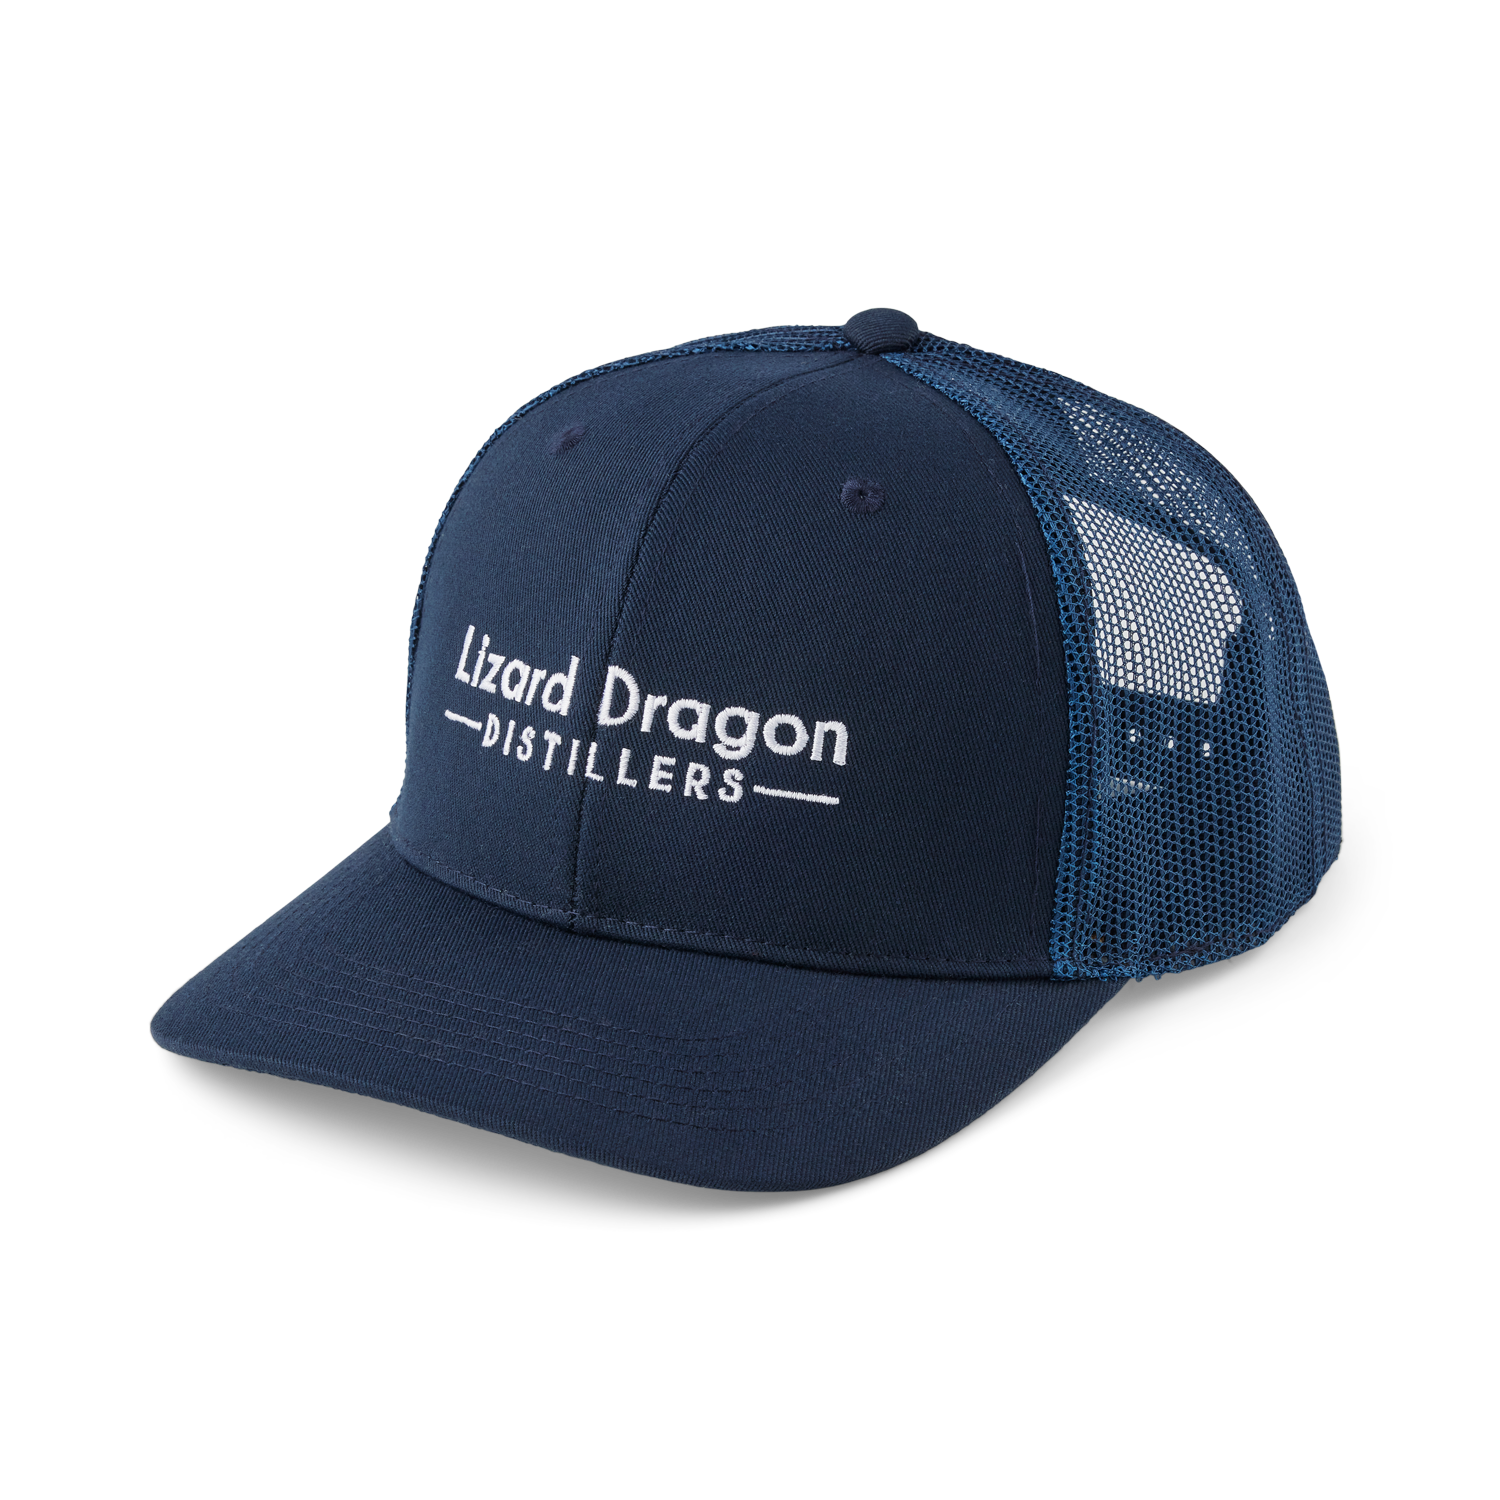 Lizard Dragon Cap